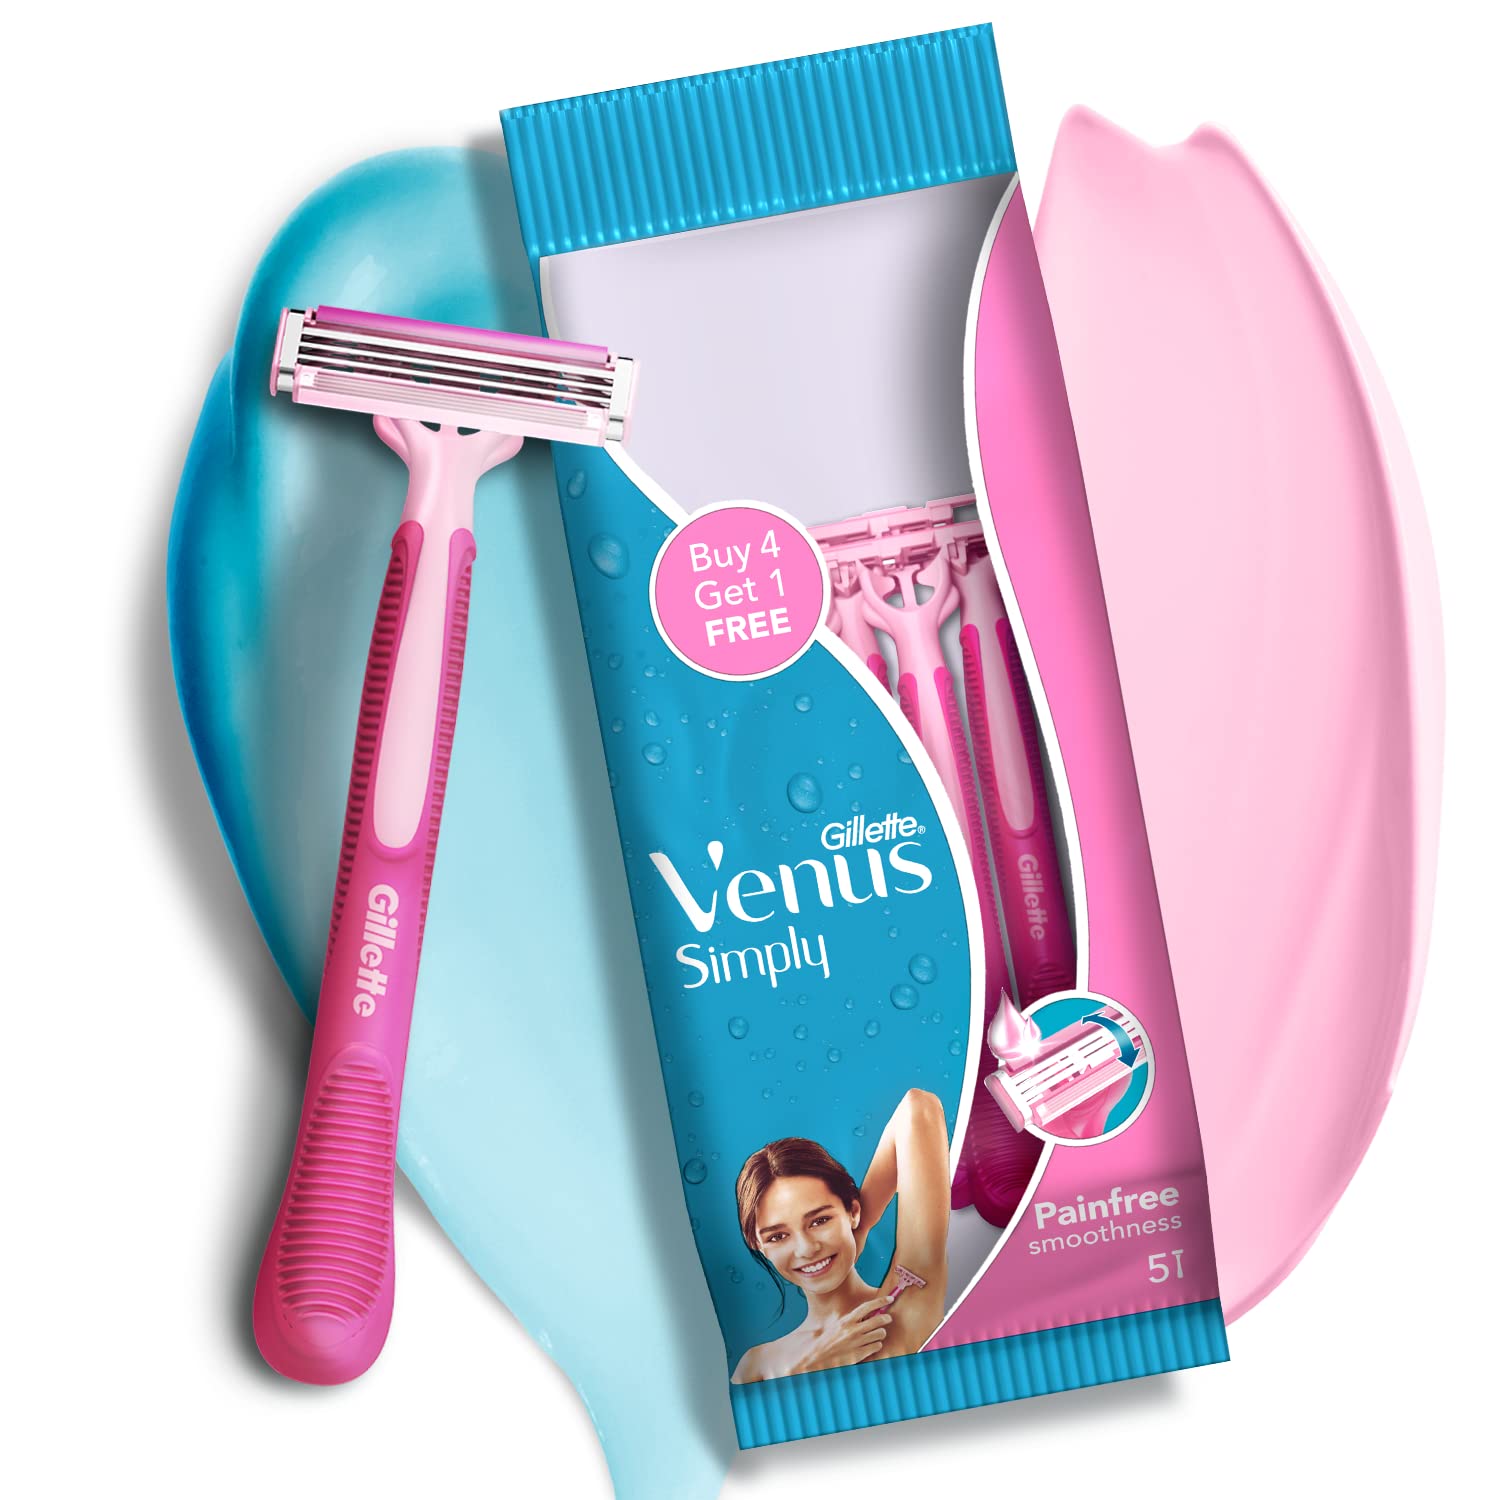 Shop in Sri Lanka for Gillette Venus Simply Venus Pink Hair Removal for Women - 5 razors - Back to results from Gillette Venus - Shop at Selekt